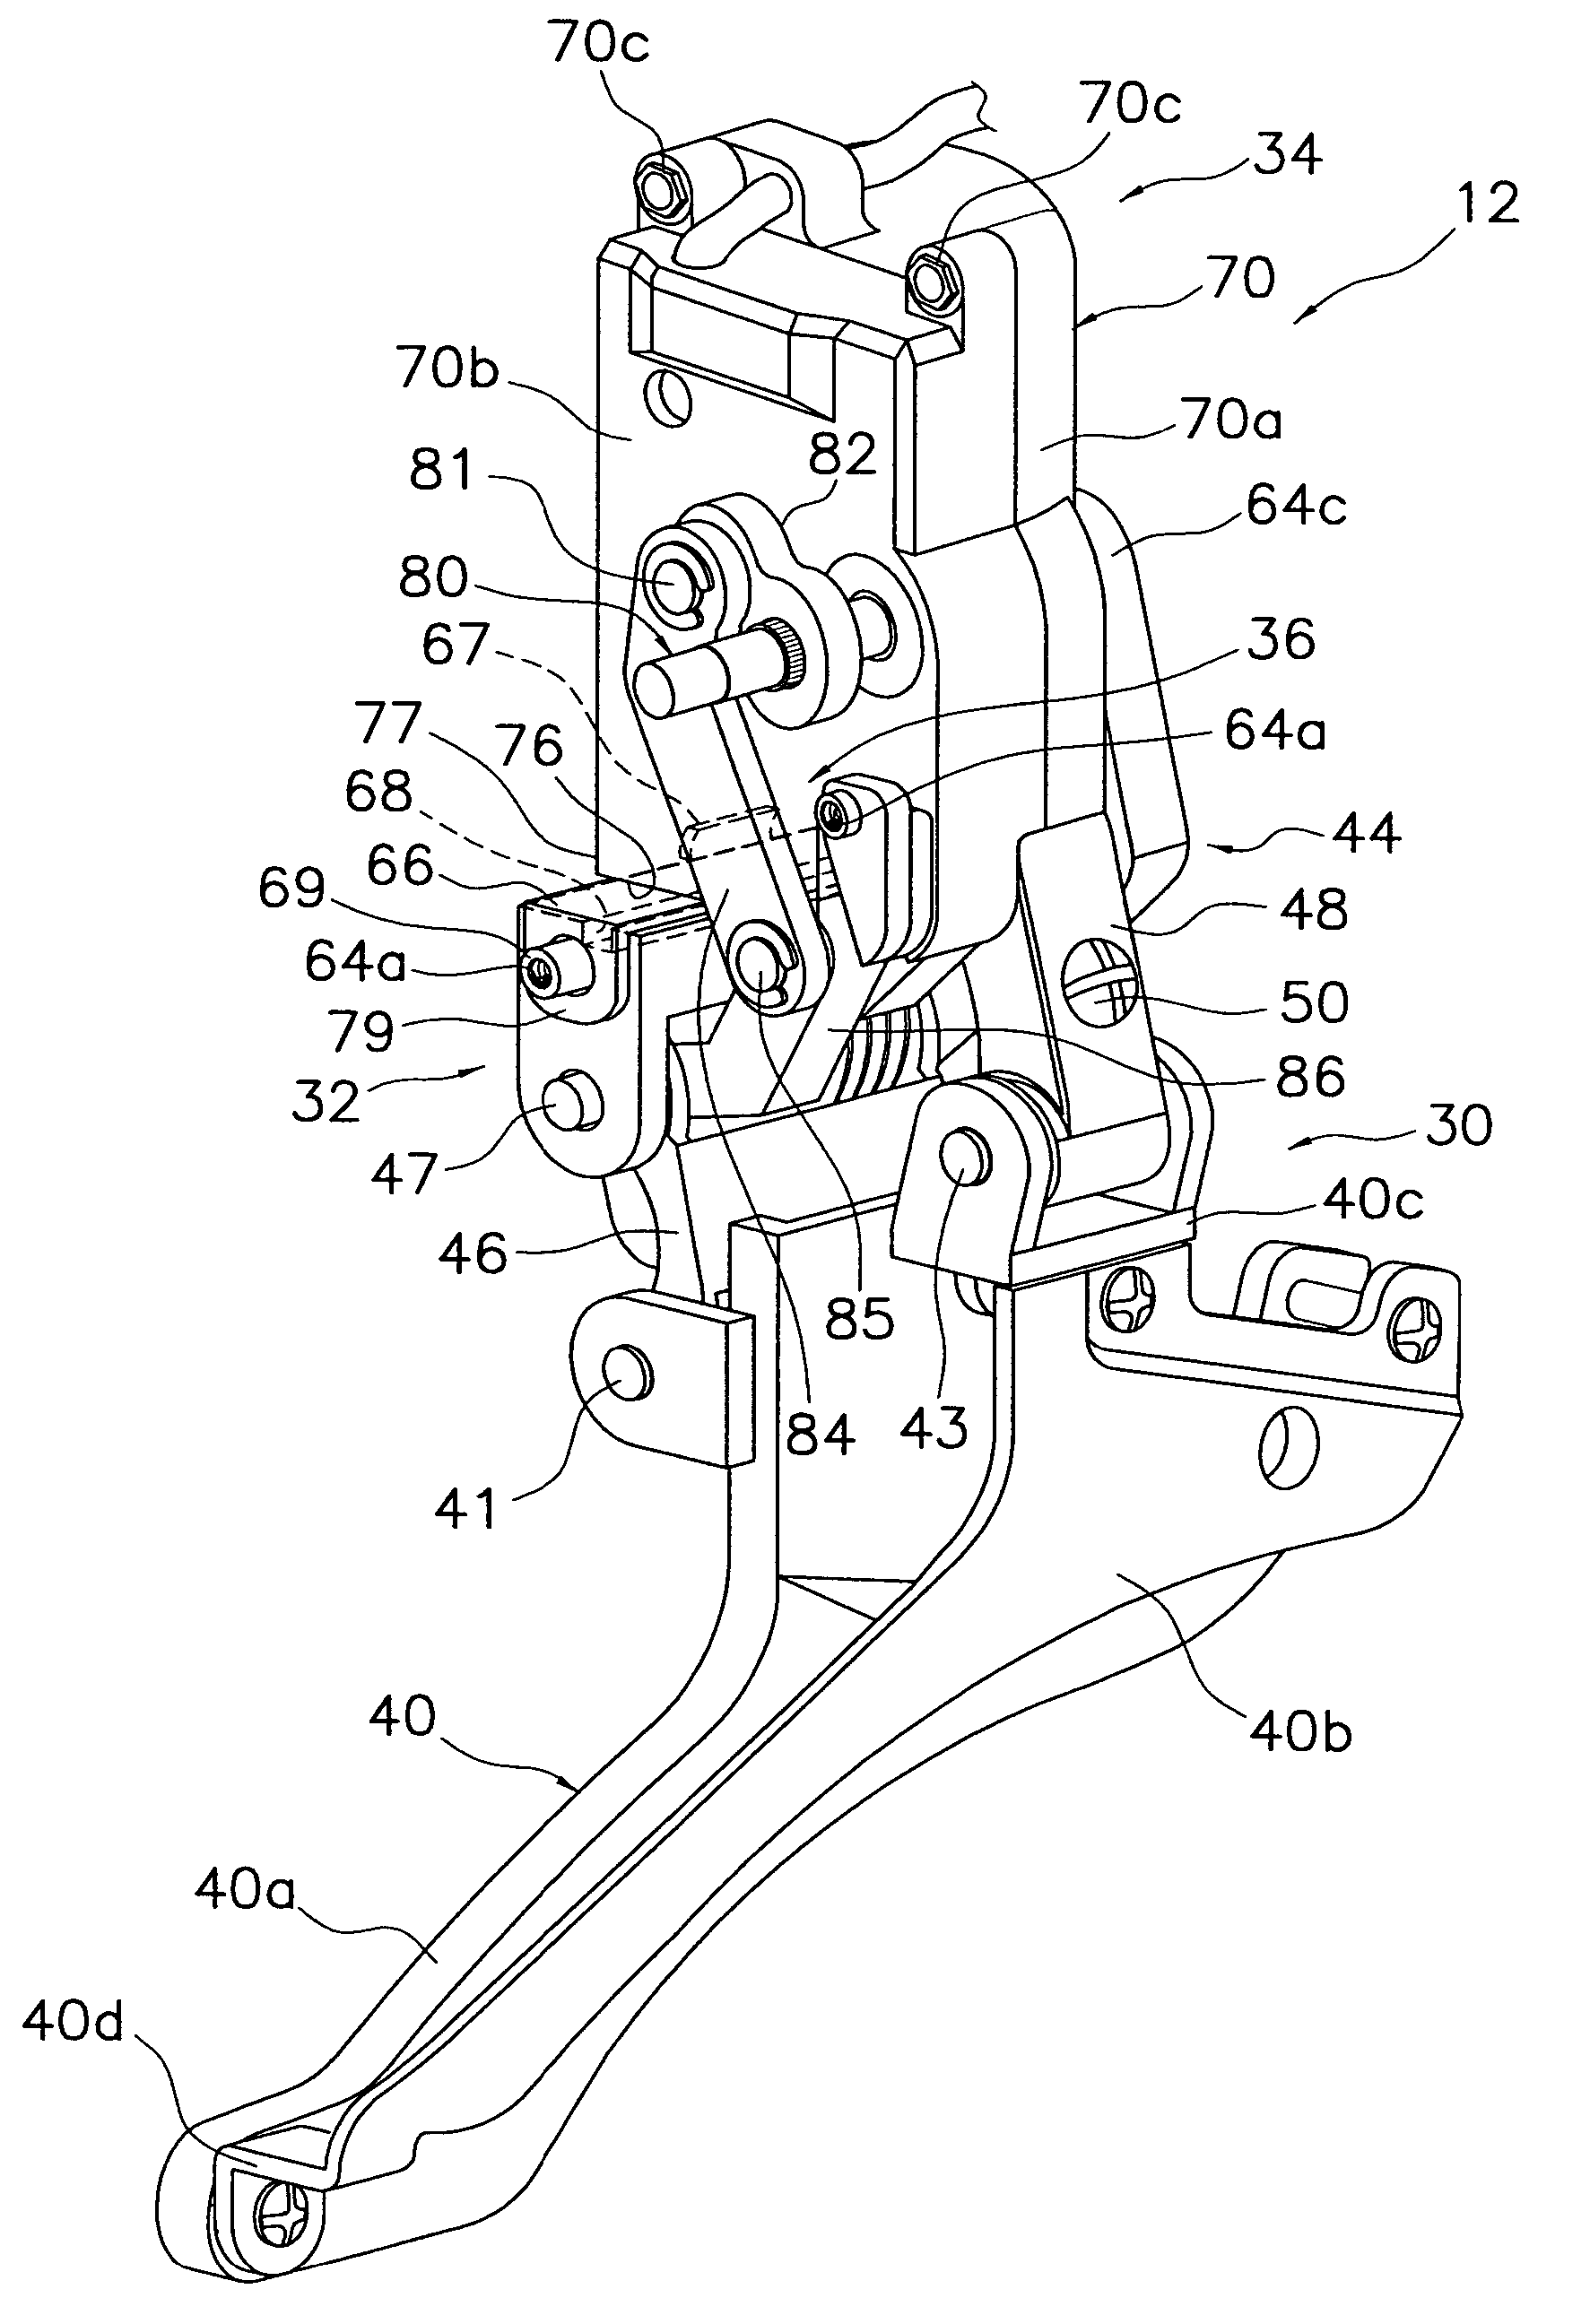 Bicycle derailleur motor unit assembly